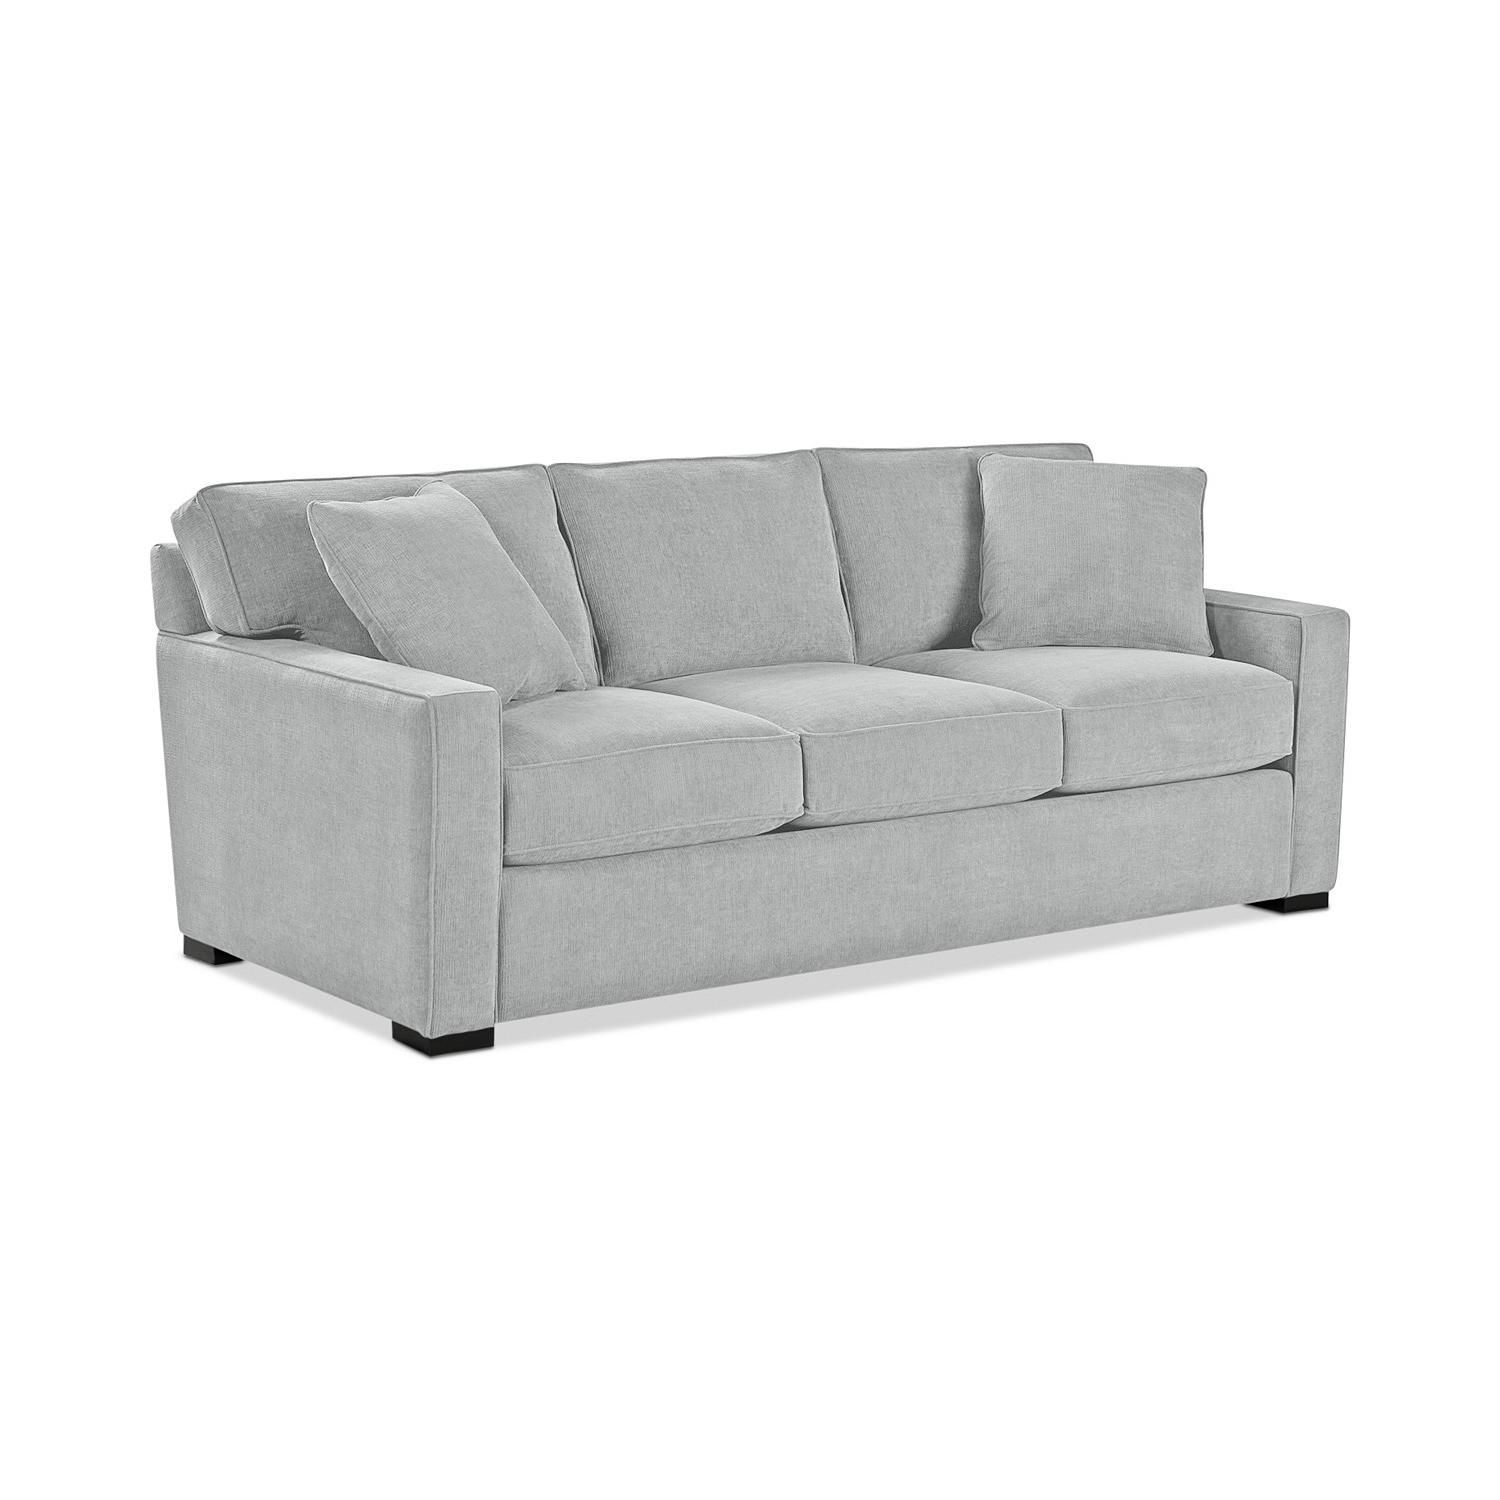 Macys Radley Fabric Queen Sleeper Sofa Home Decor Sofa In Size 1500 X 1500 